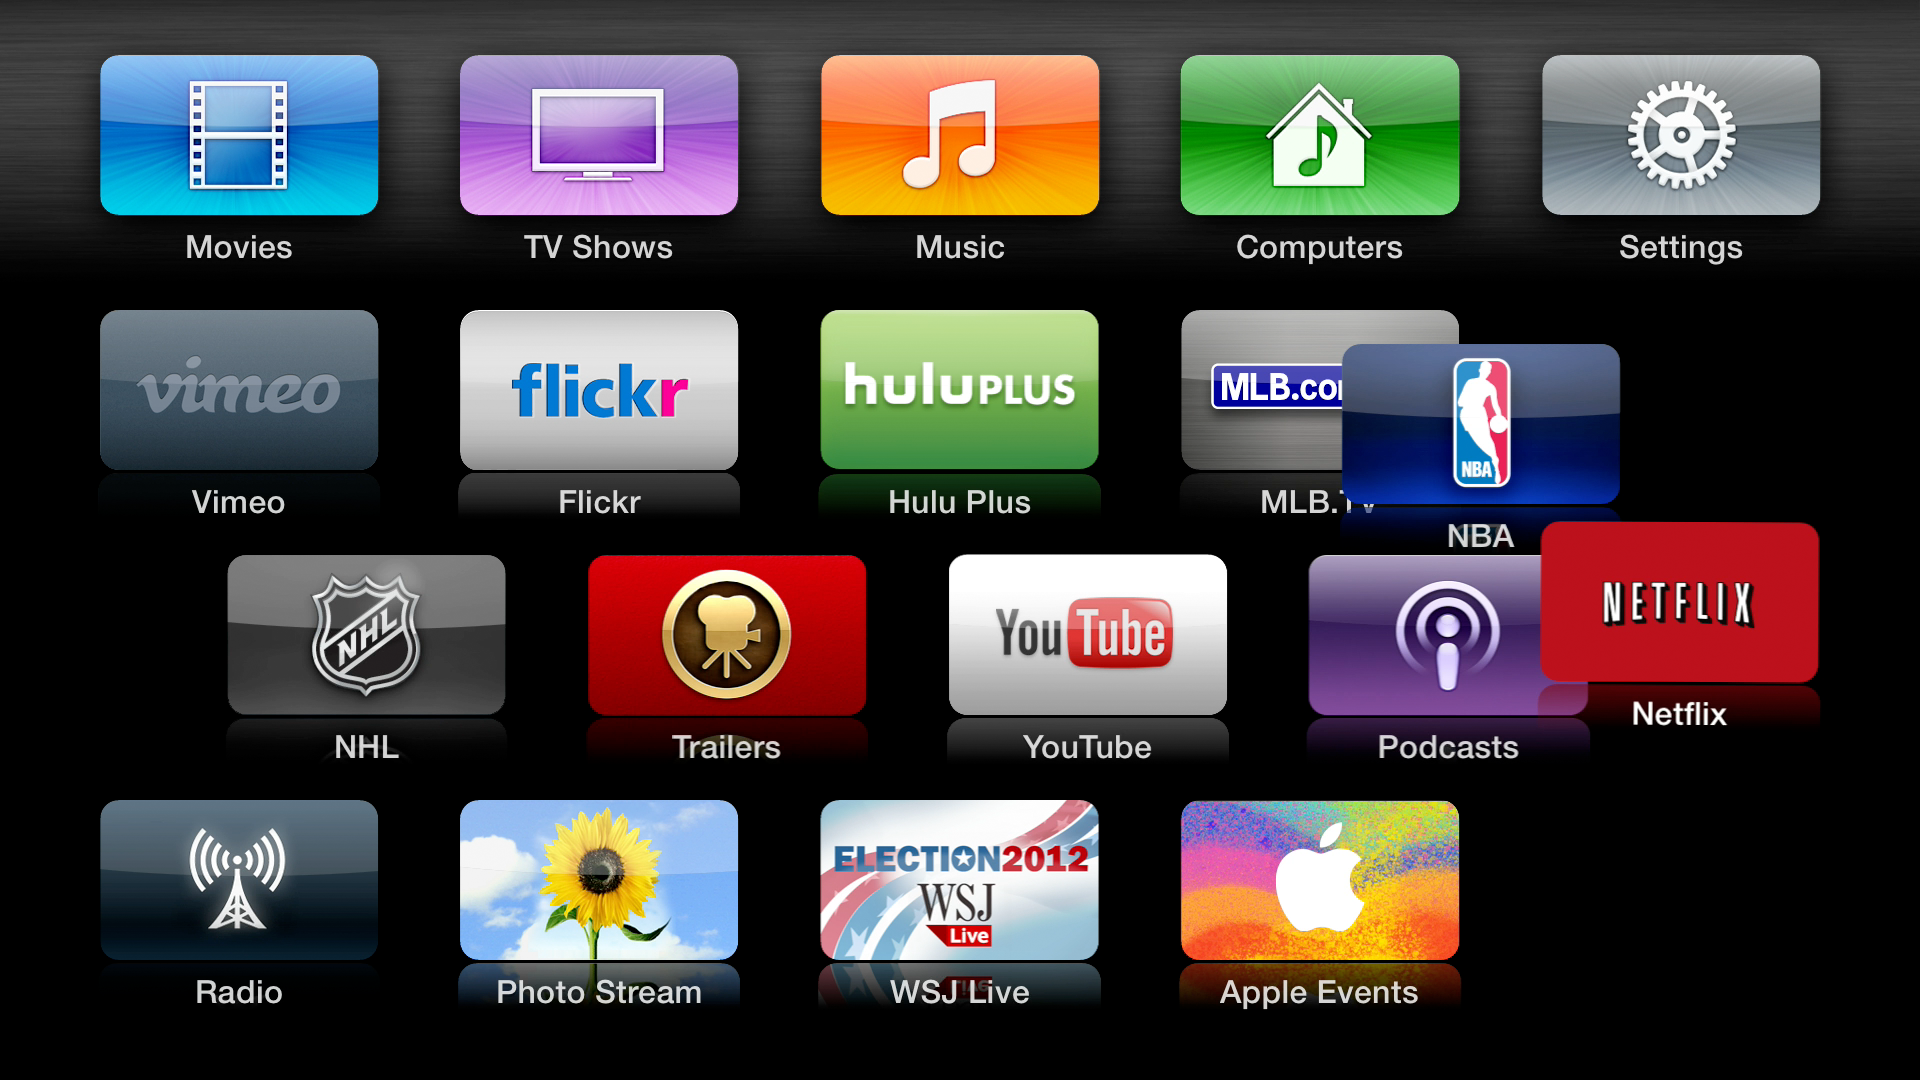 apple store tv app